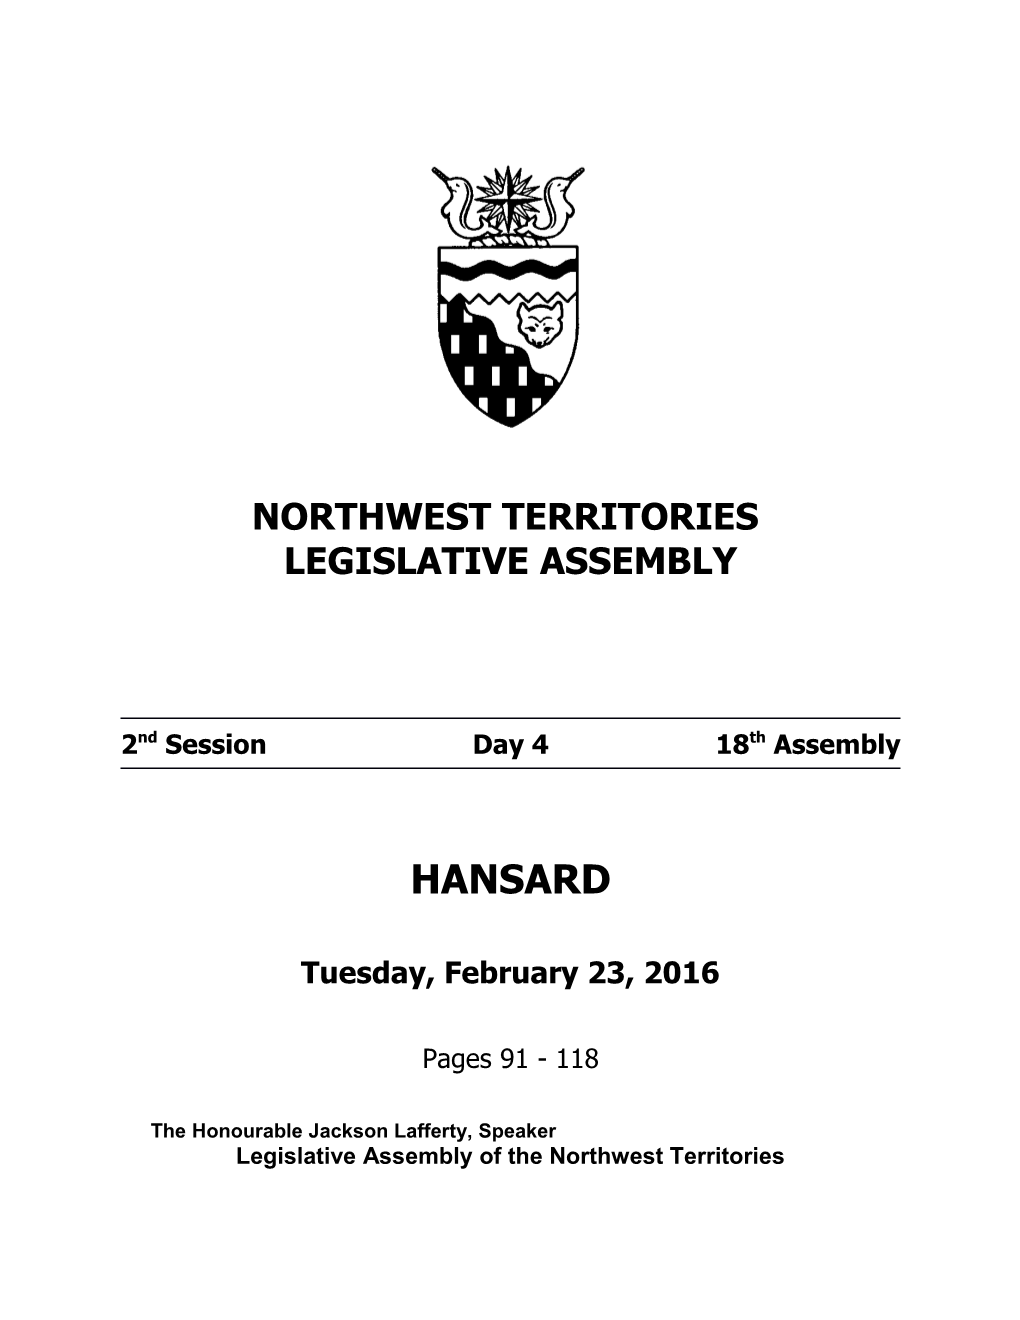 Hansard of the Legislative Assembly of the Northwest Territories; for Official Hansard